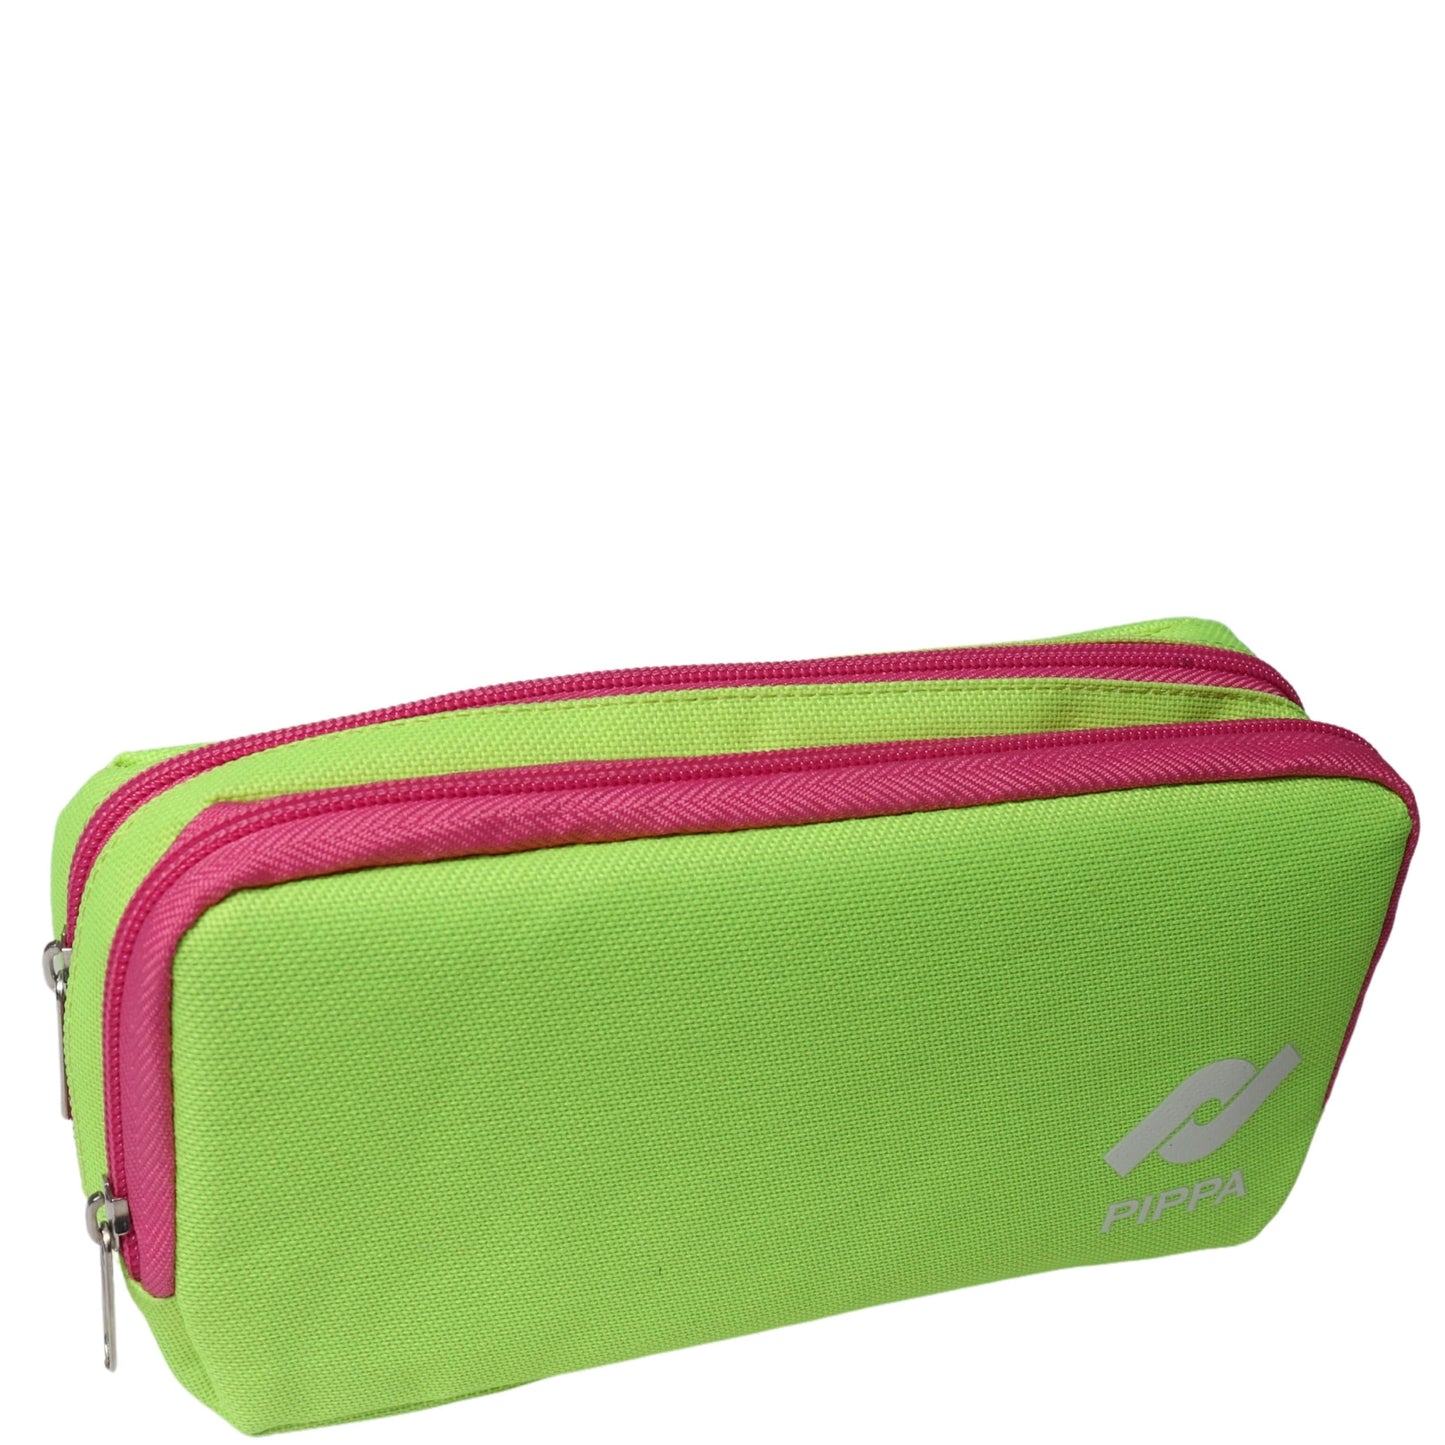 PIPPA School Bags & Supplies Green PIPPA - Pencil Case 2 Zippers